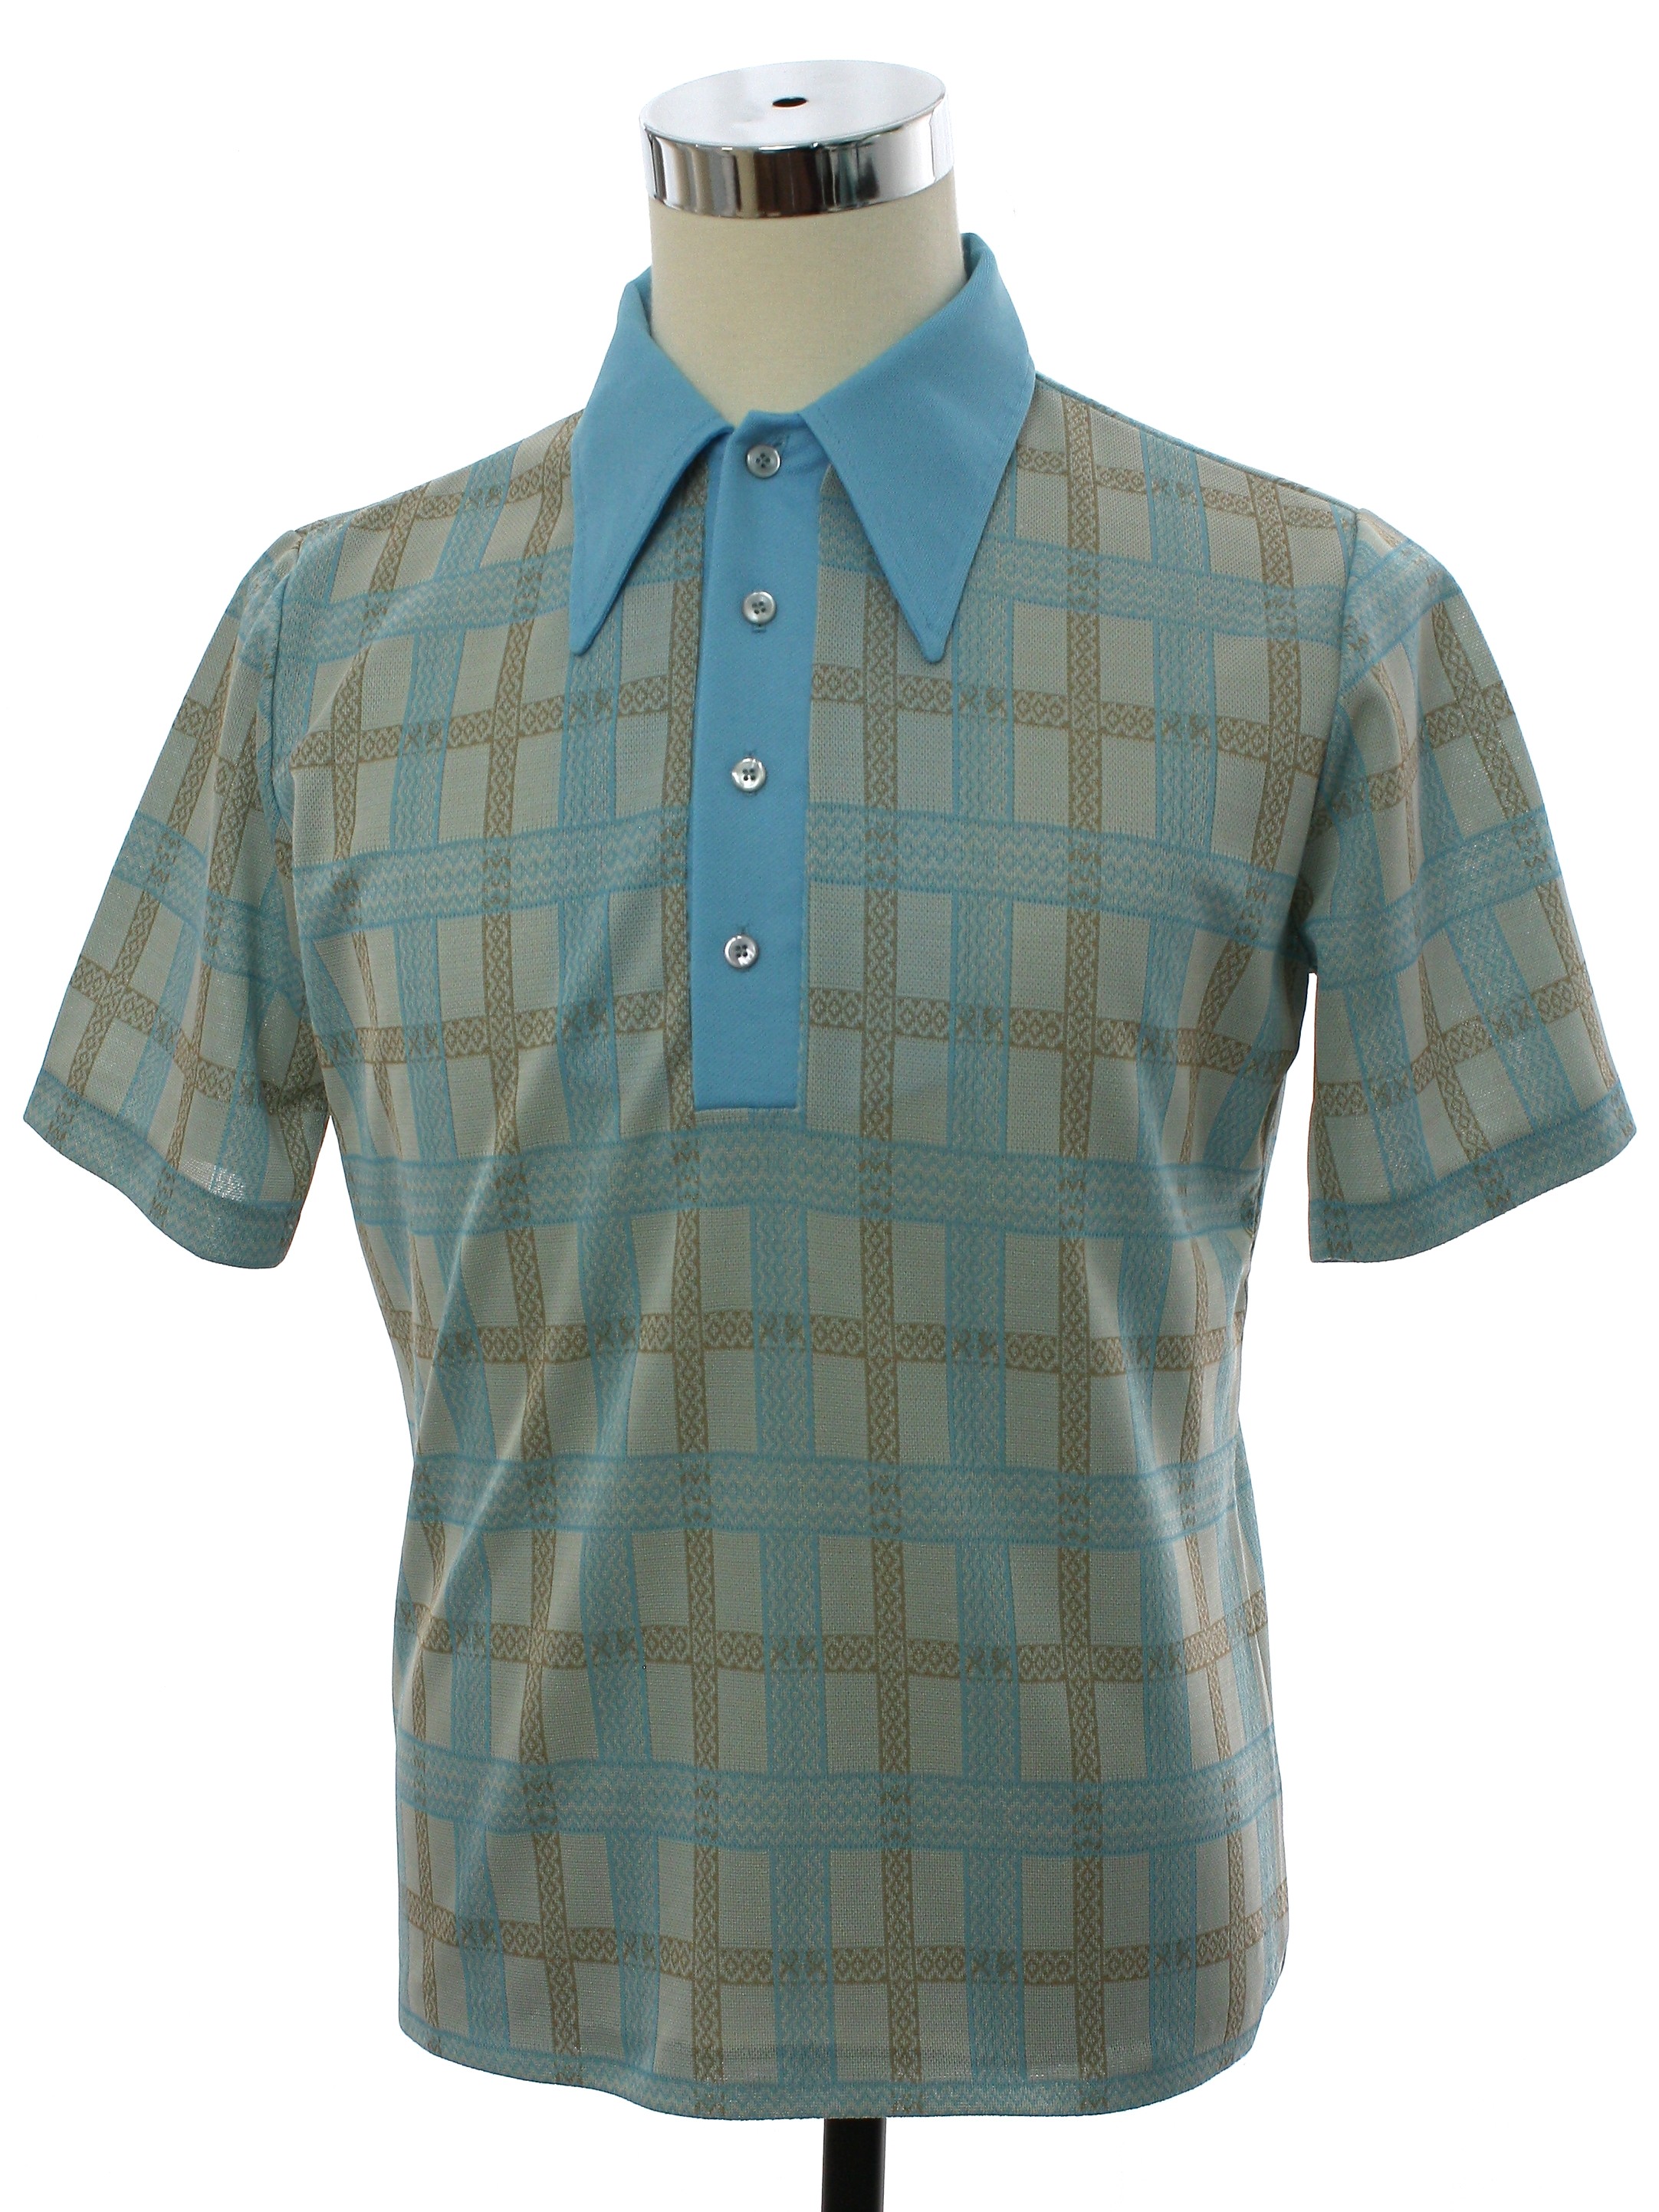 Retro Seventies Knit Shirt: 70s -Towncraft JcPenney- Mens light blue ...